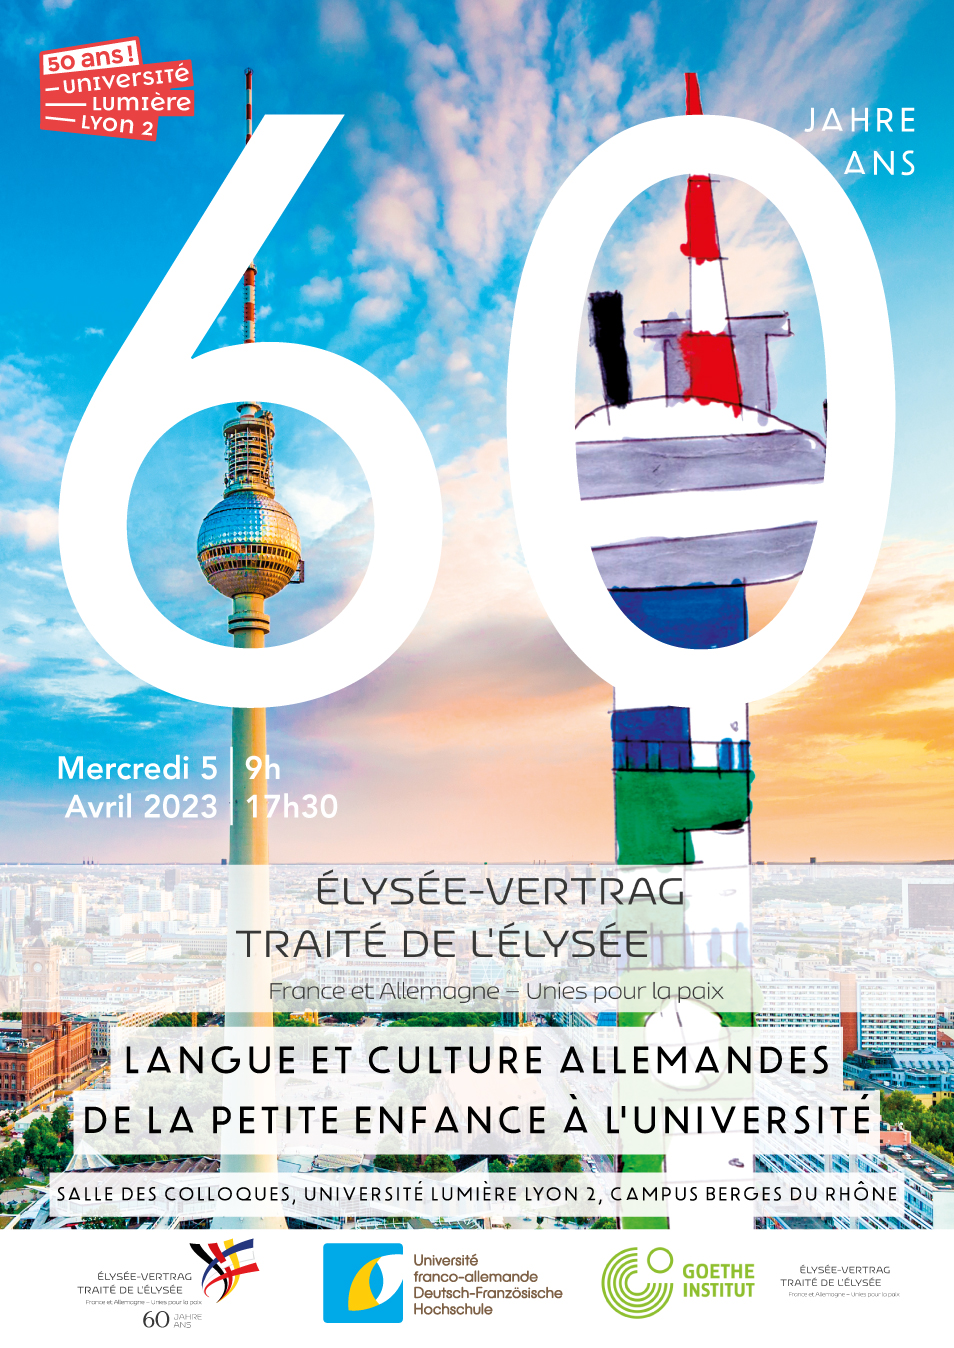 60 ans d'amitié franco-allemande